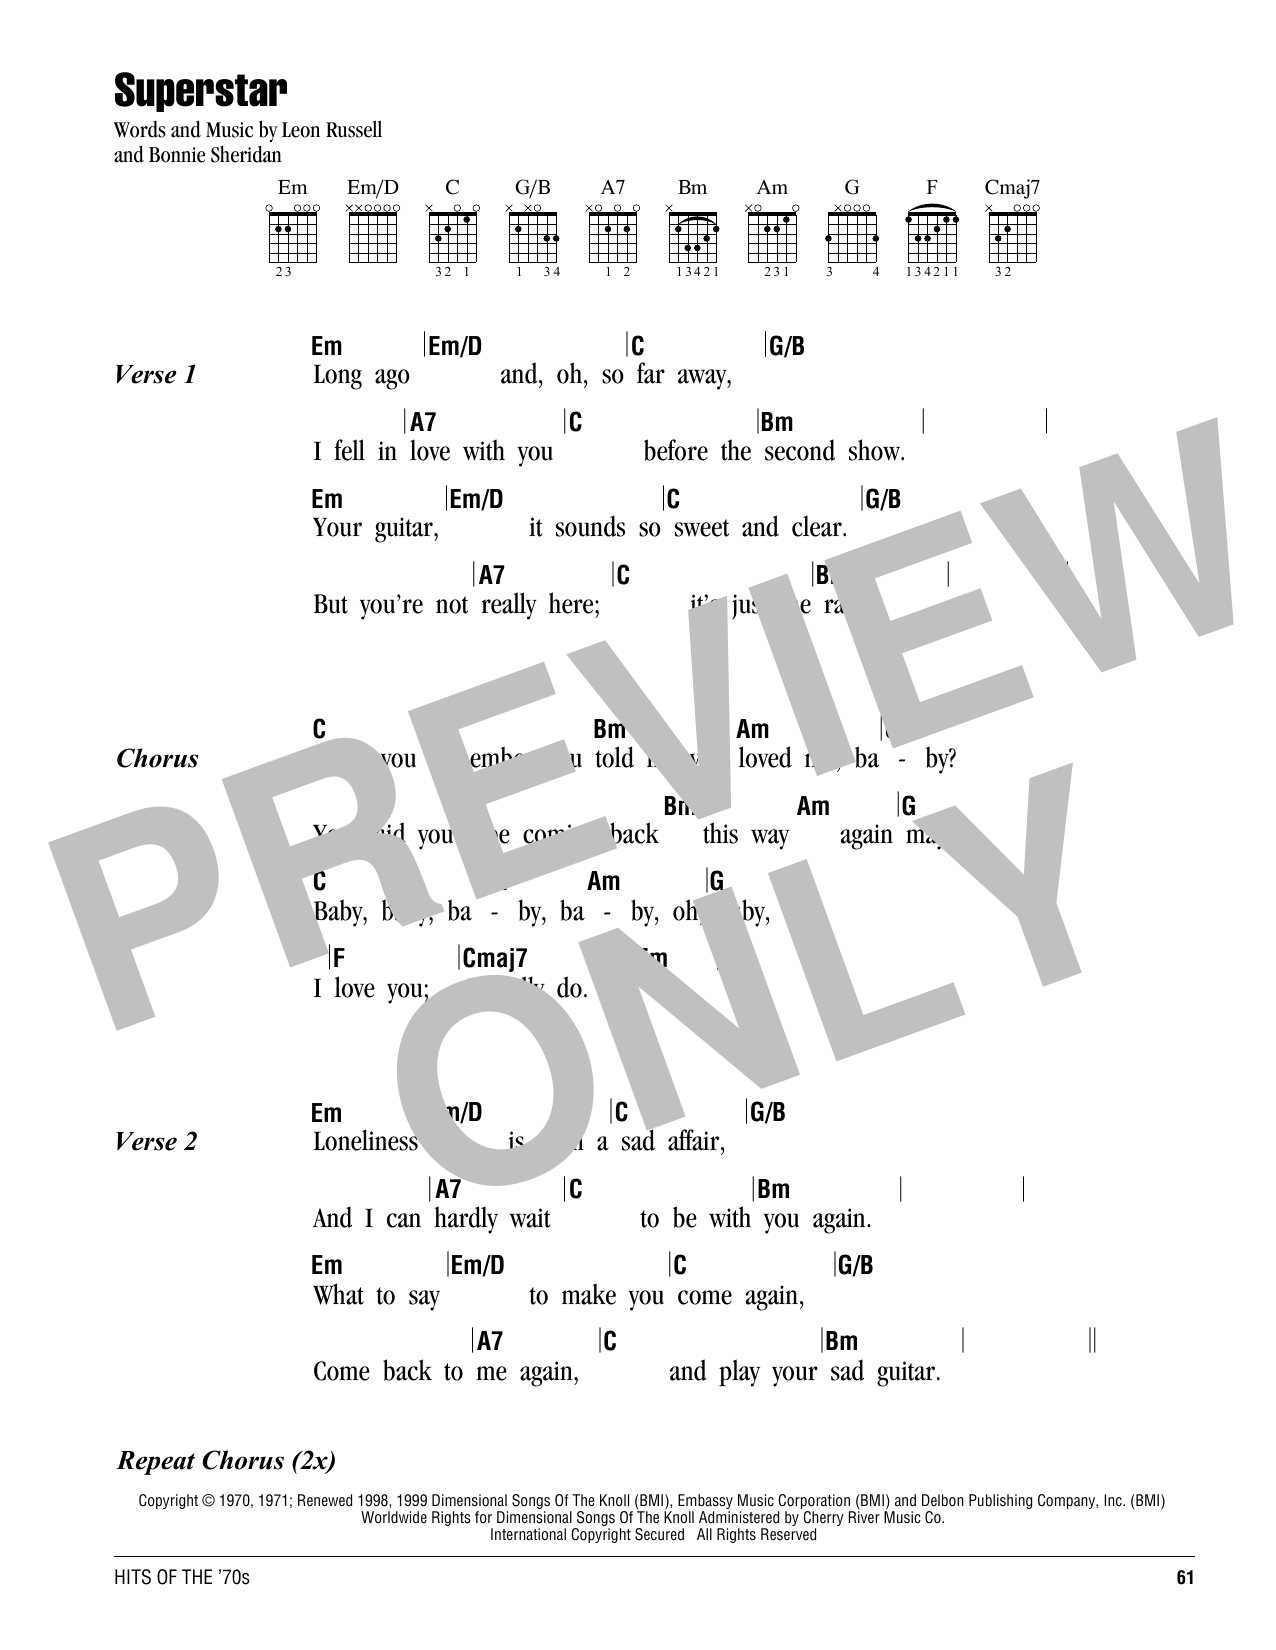 Carpenters Superstar Sheet Music Notes & Chords for Keyboard - Download or Print PDF